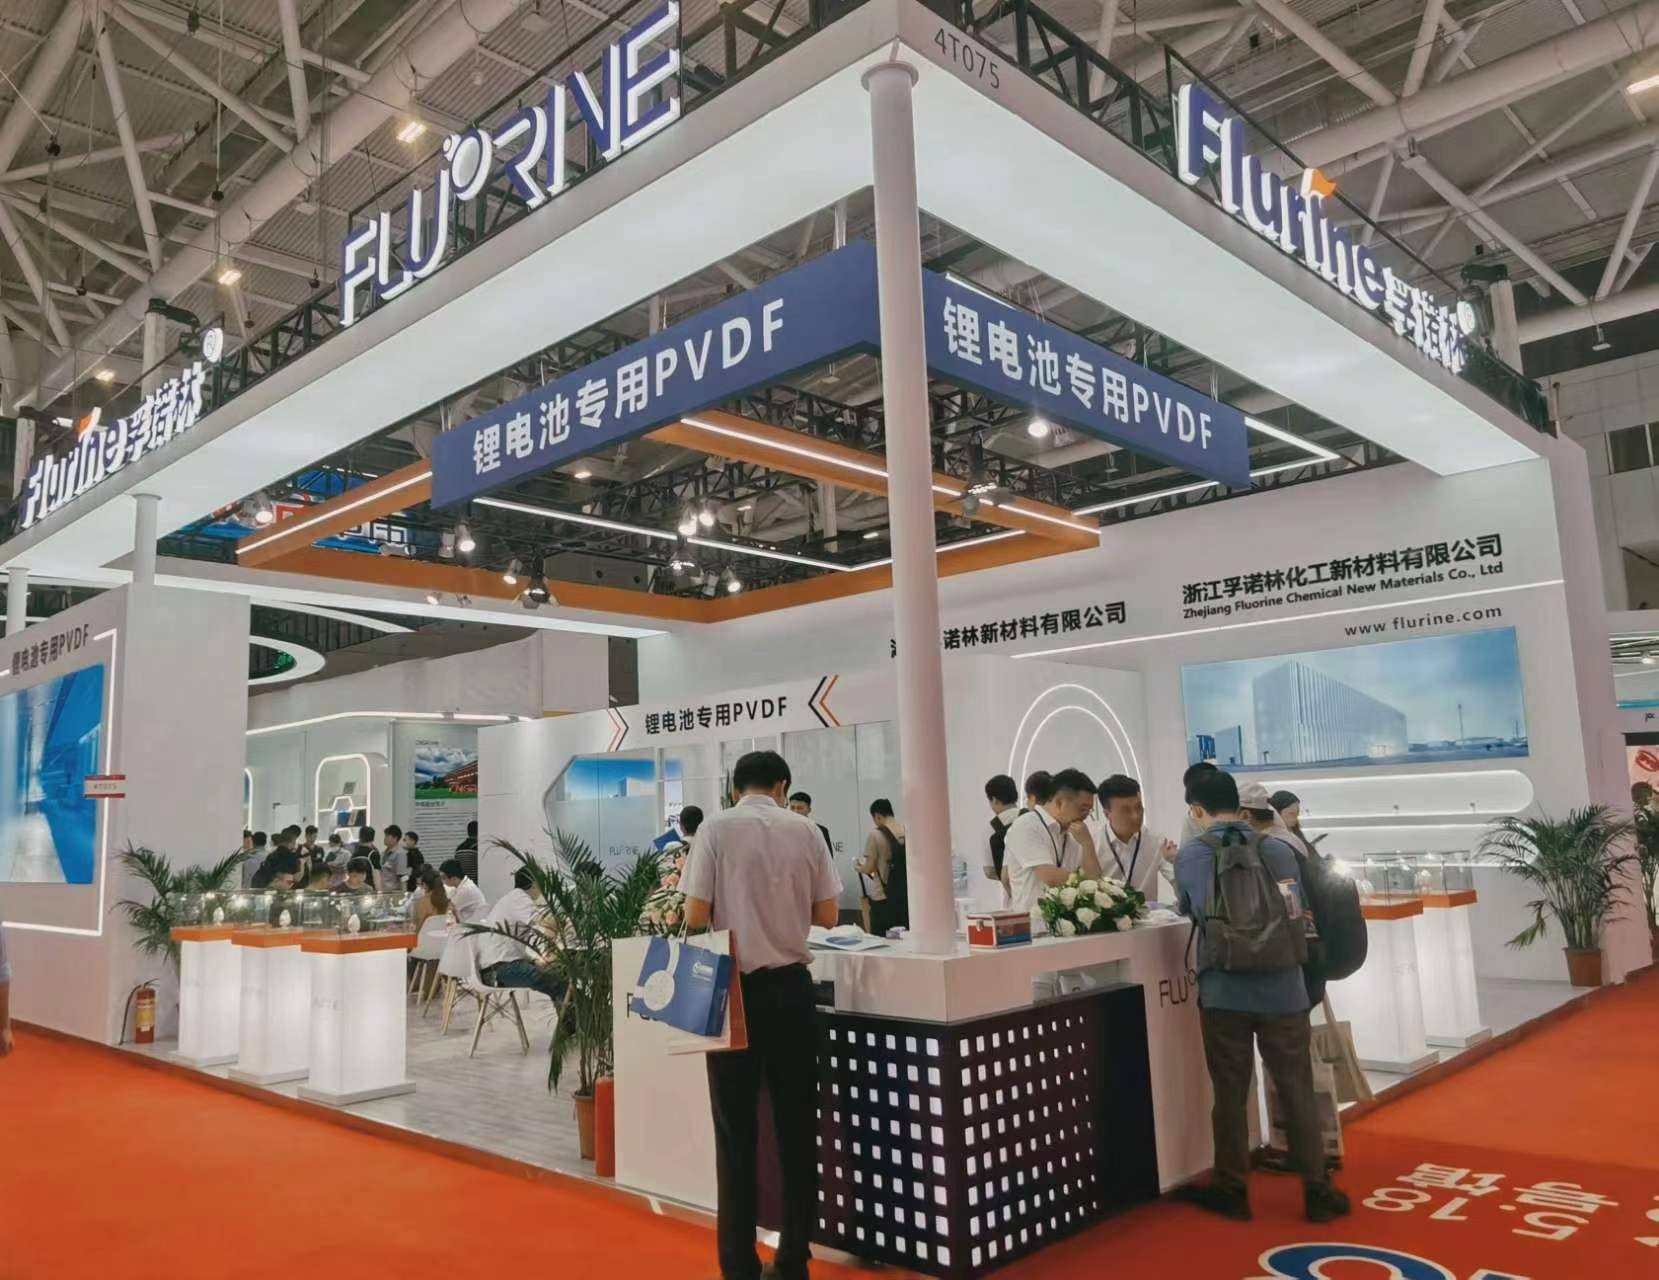 Fluorine-Team nahm an der 15. CIBF (China International Battery Fair) teil